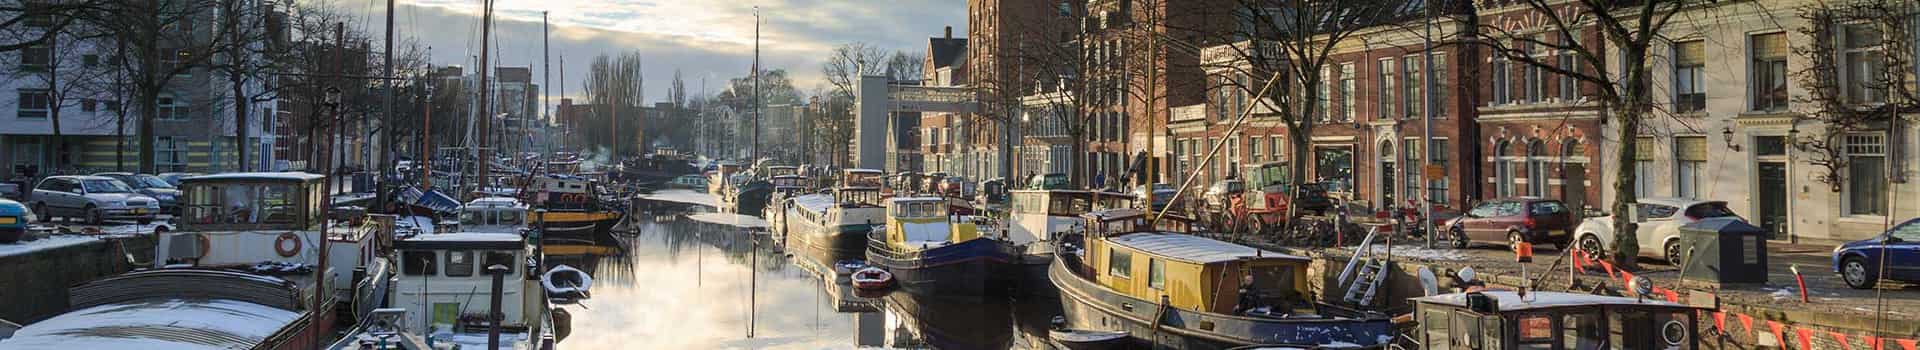 Hotels Groningen Stad